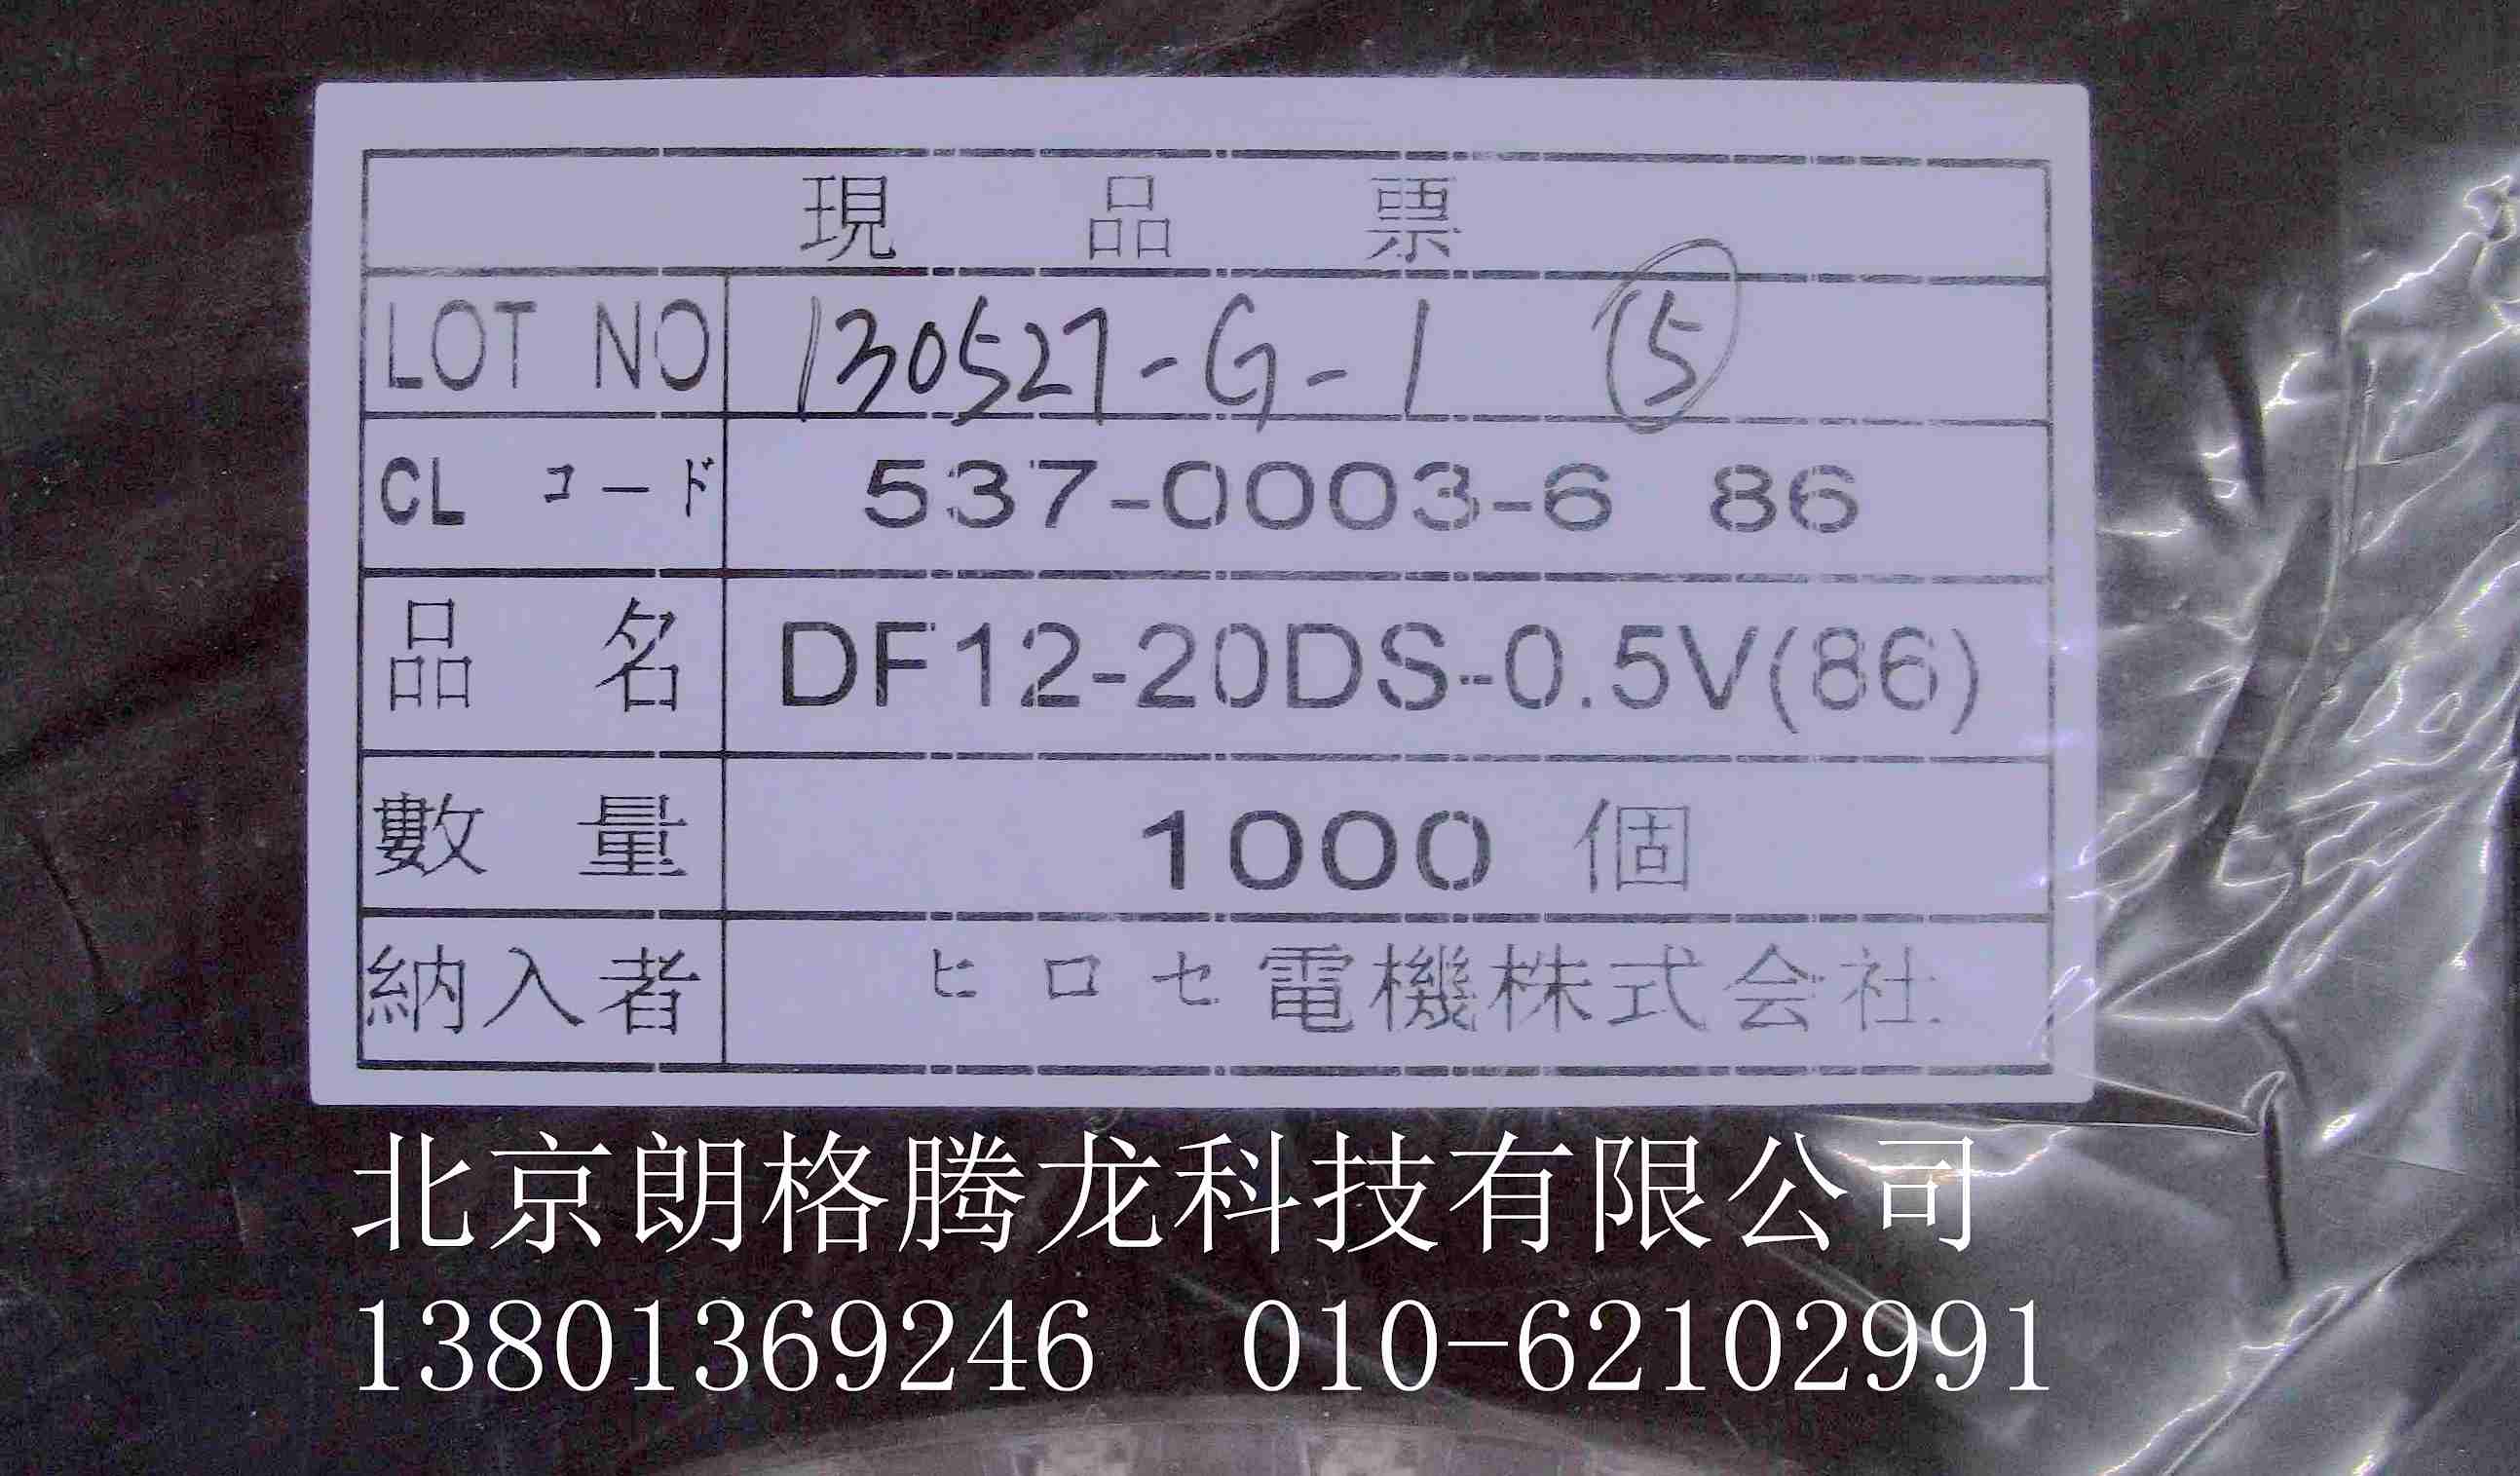 接插件 DF12-20DS-0.5V(86)